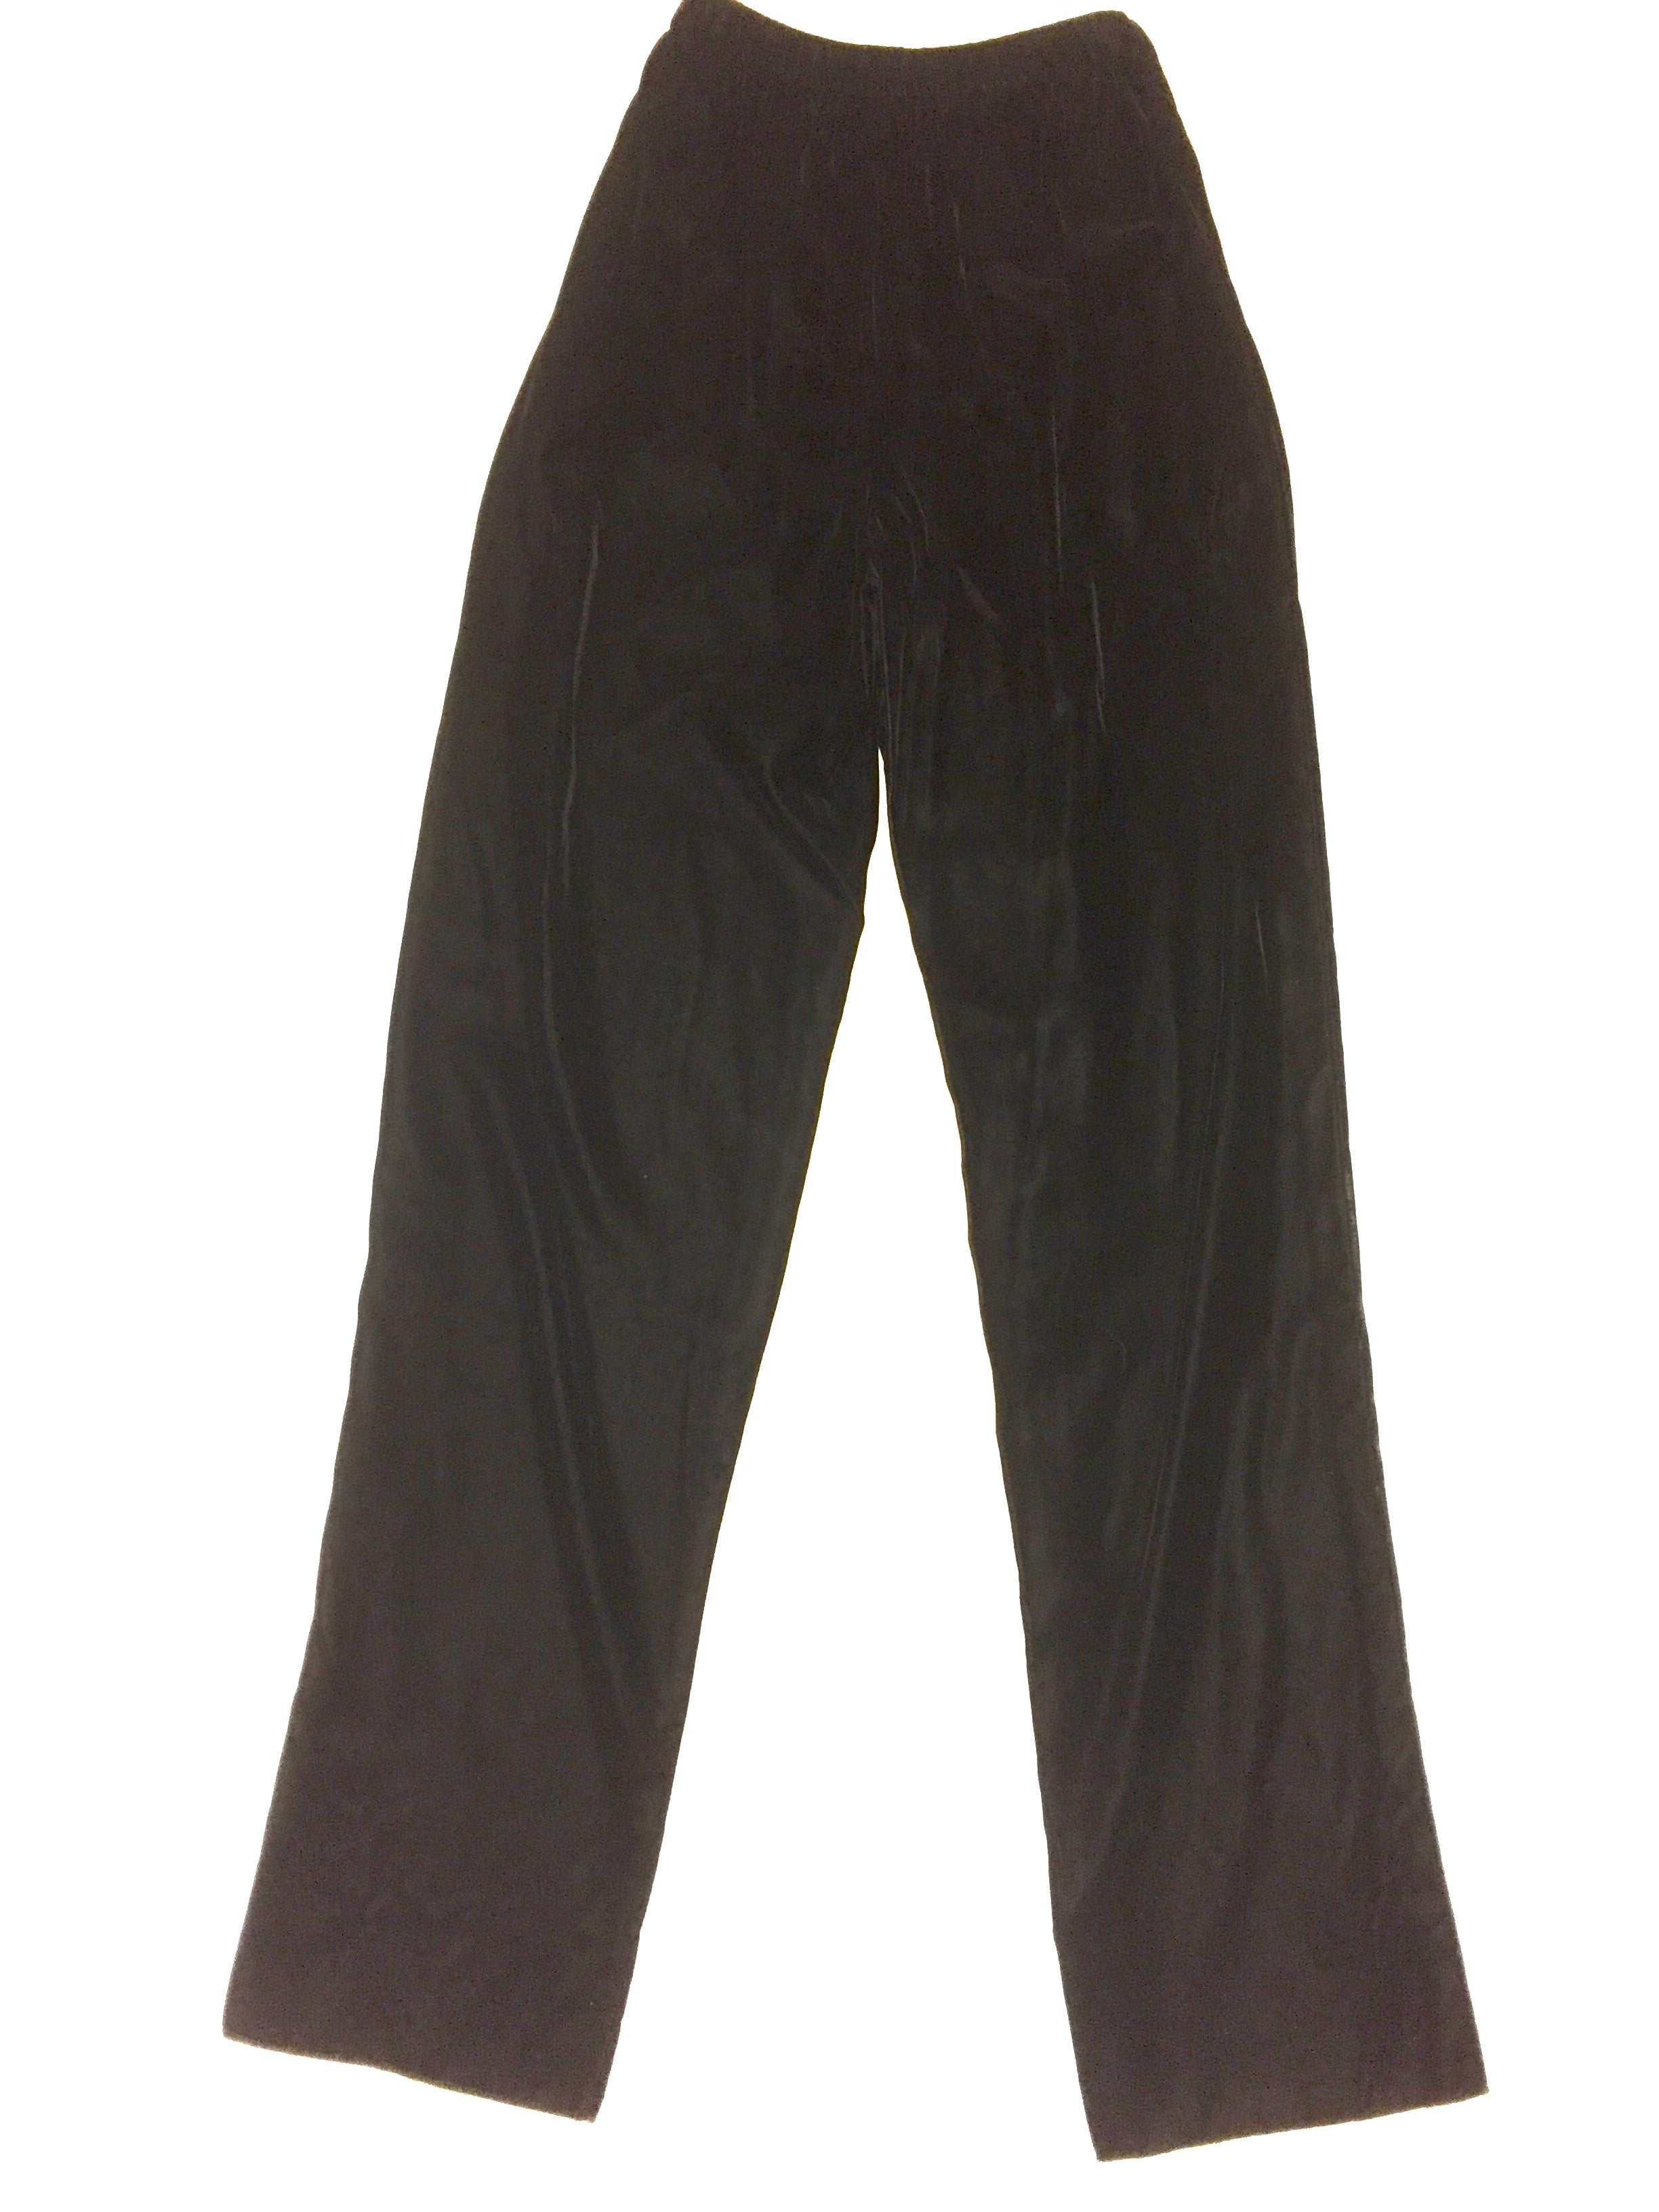 Buy > black dress pants with elastic waist > in stock